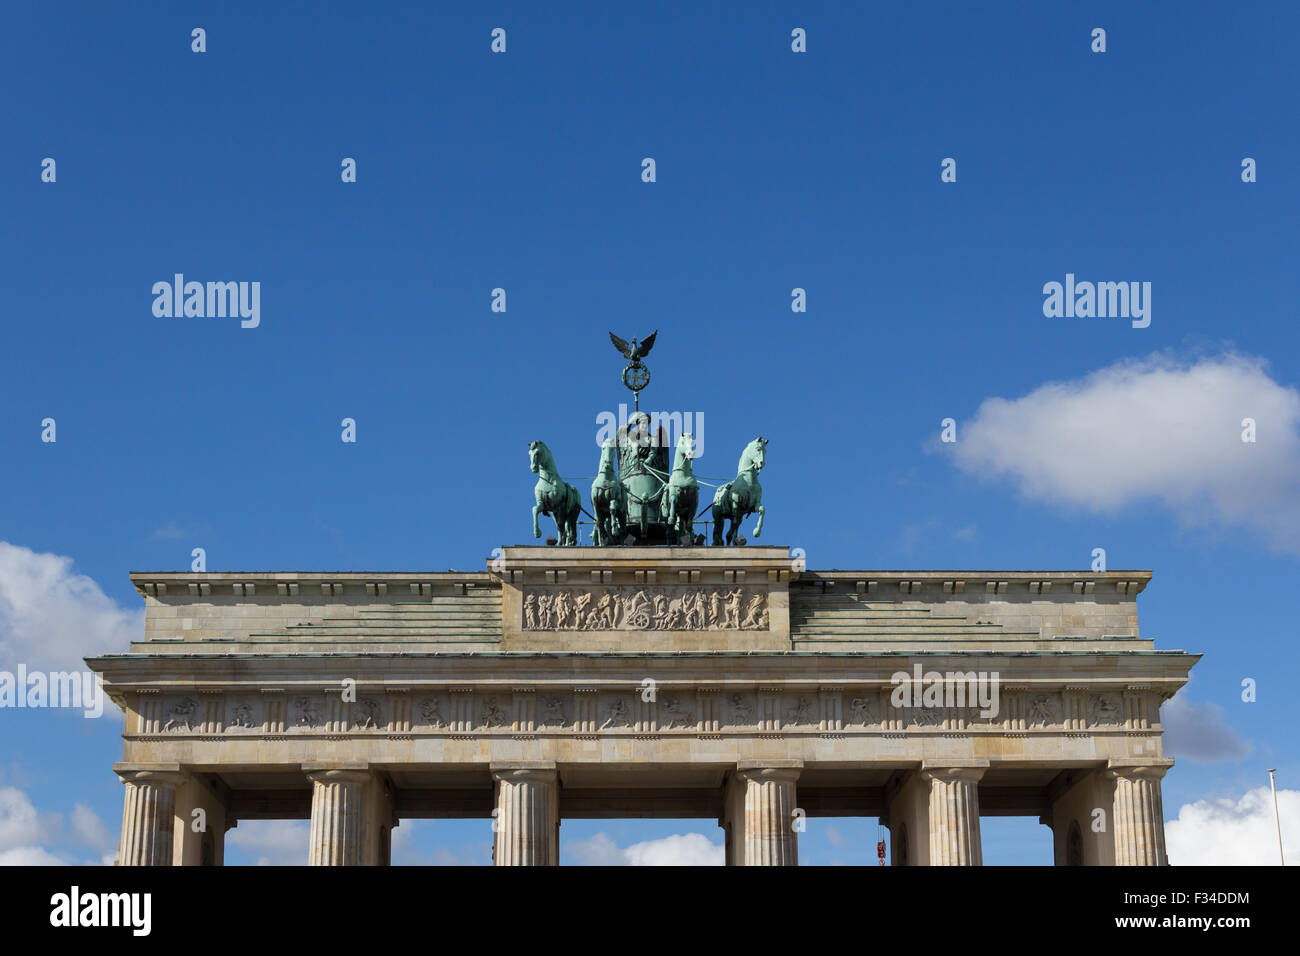 Top of the brandenburg gate / Quadriga, Berlin, Germany Stock Photo